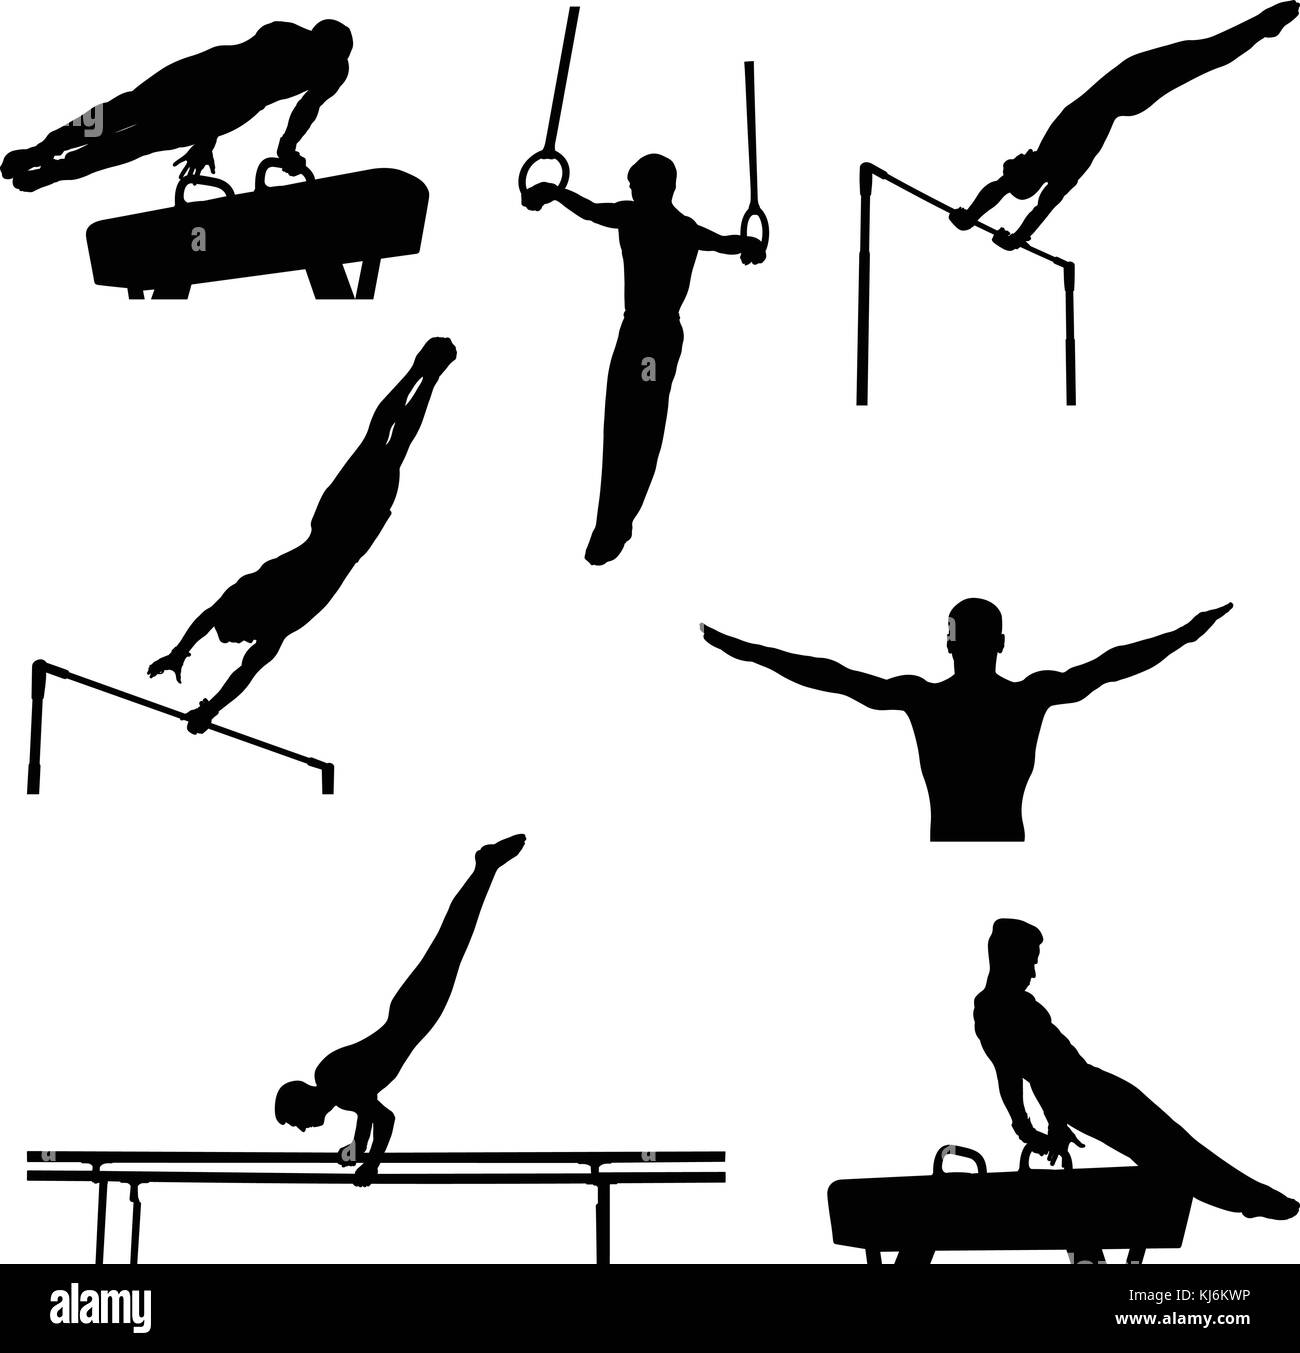 https://c8.alamy.com/comp/KJ6KWP/set-men-athletes-gymnasts-in-artistic-gymnastics-silhouette-KJ6KWP.jpg